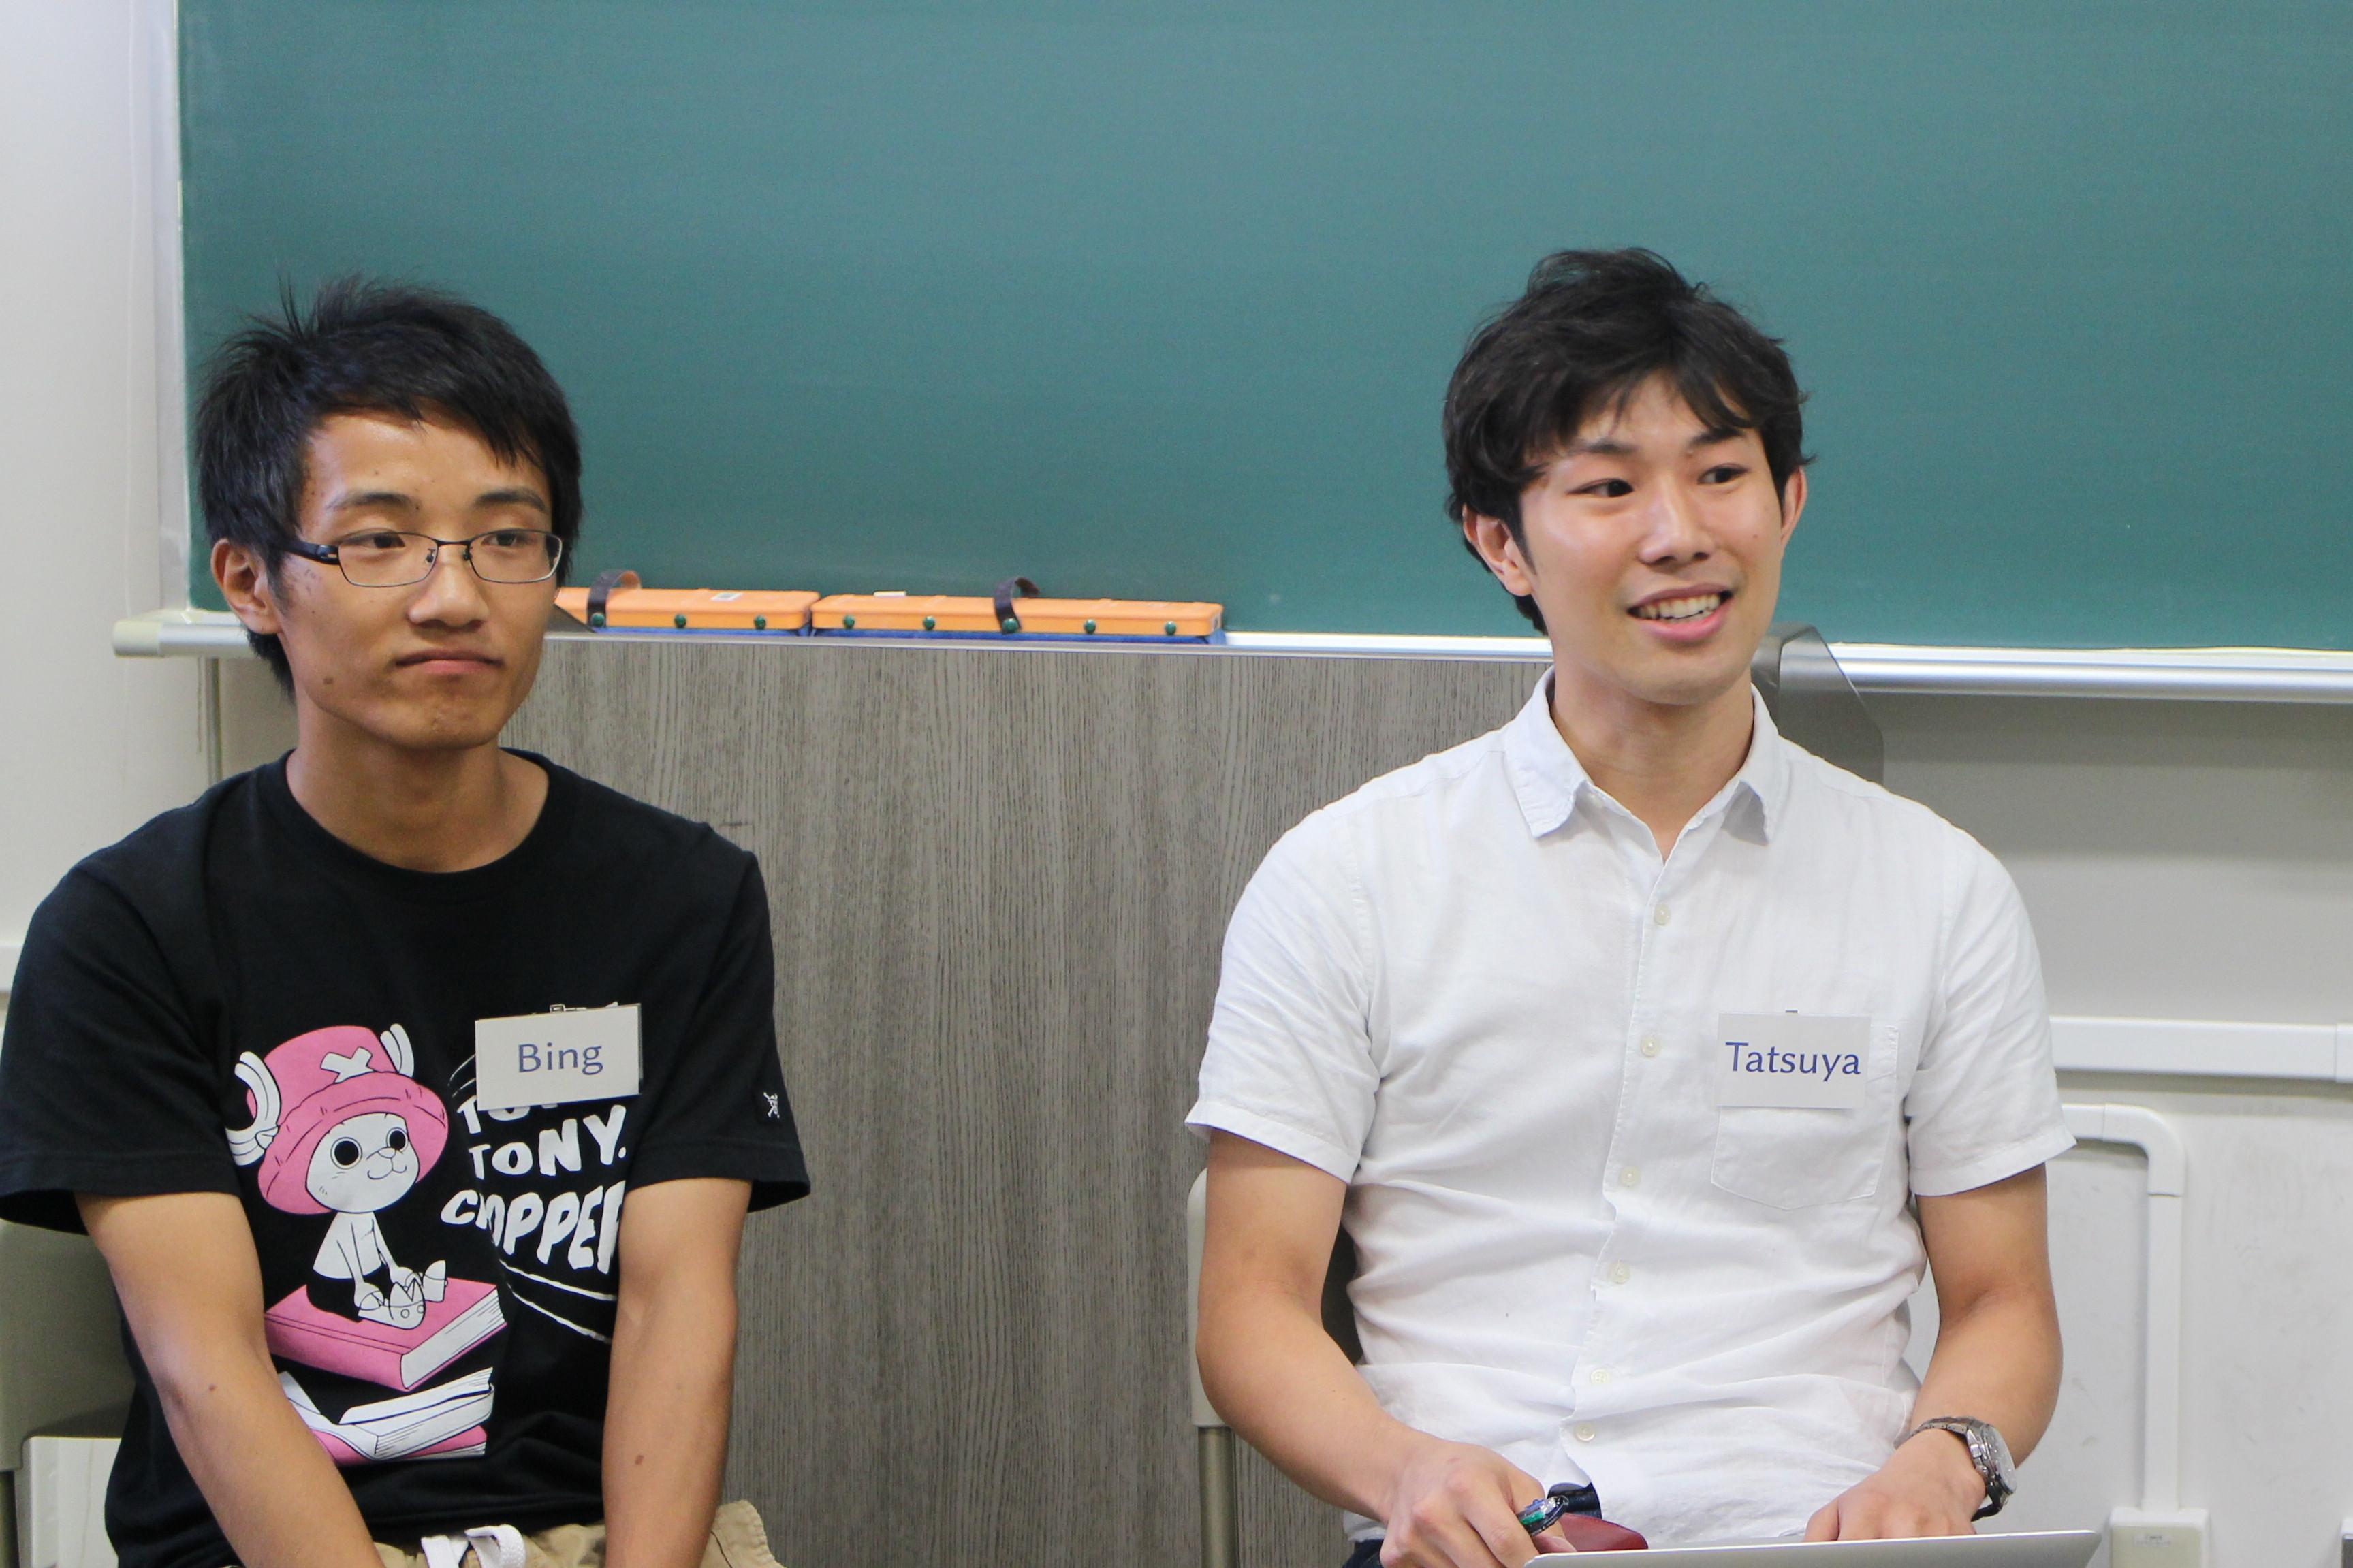 From left to right: Mr. Bing Liu and Mr. Tatsuya Ishikawa